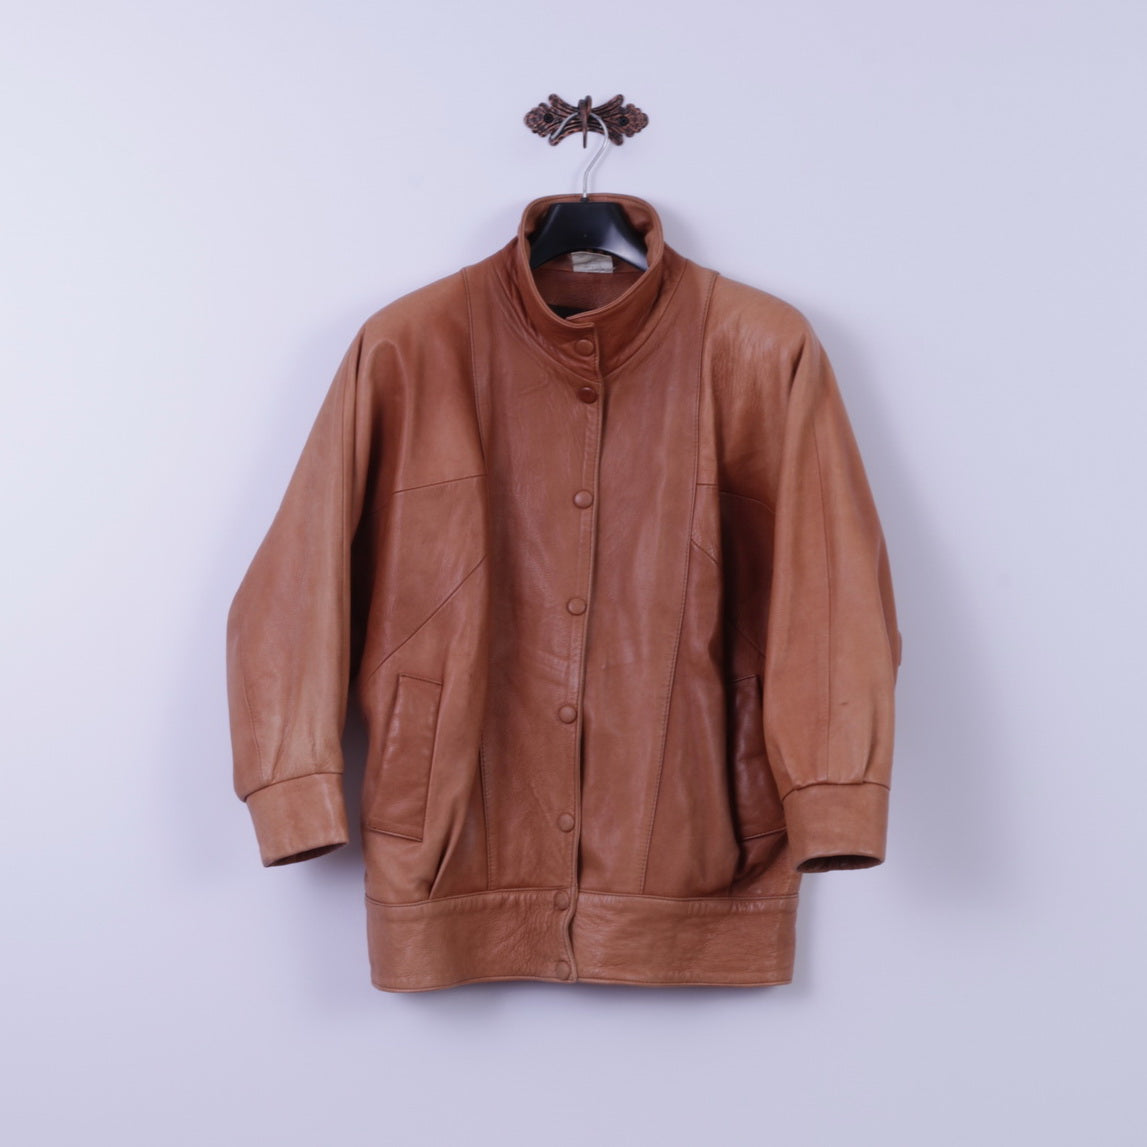 Albir Piel Womens M Bomber Jacket Brown Leather Vintage Made In Spain Snap Top